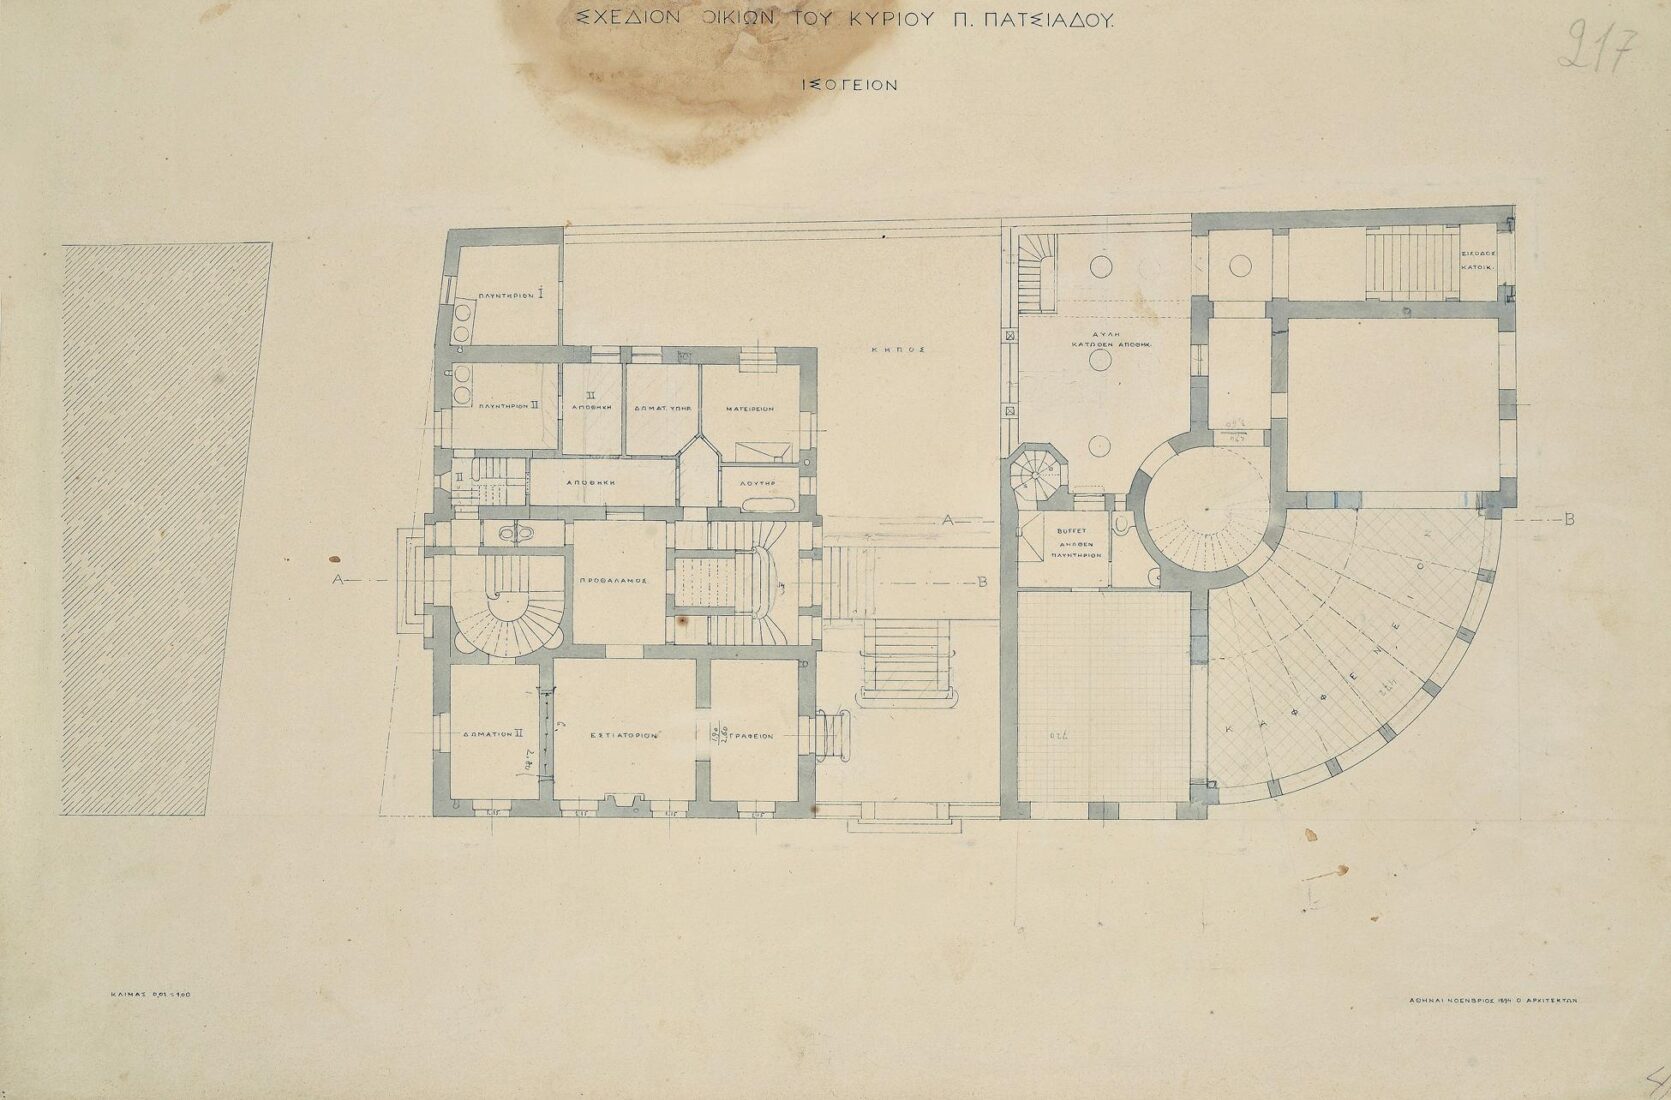 P. Patsiadis Houses, Alexandras Square, Zea. Ground Floor Plan - Ziller Ernst